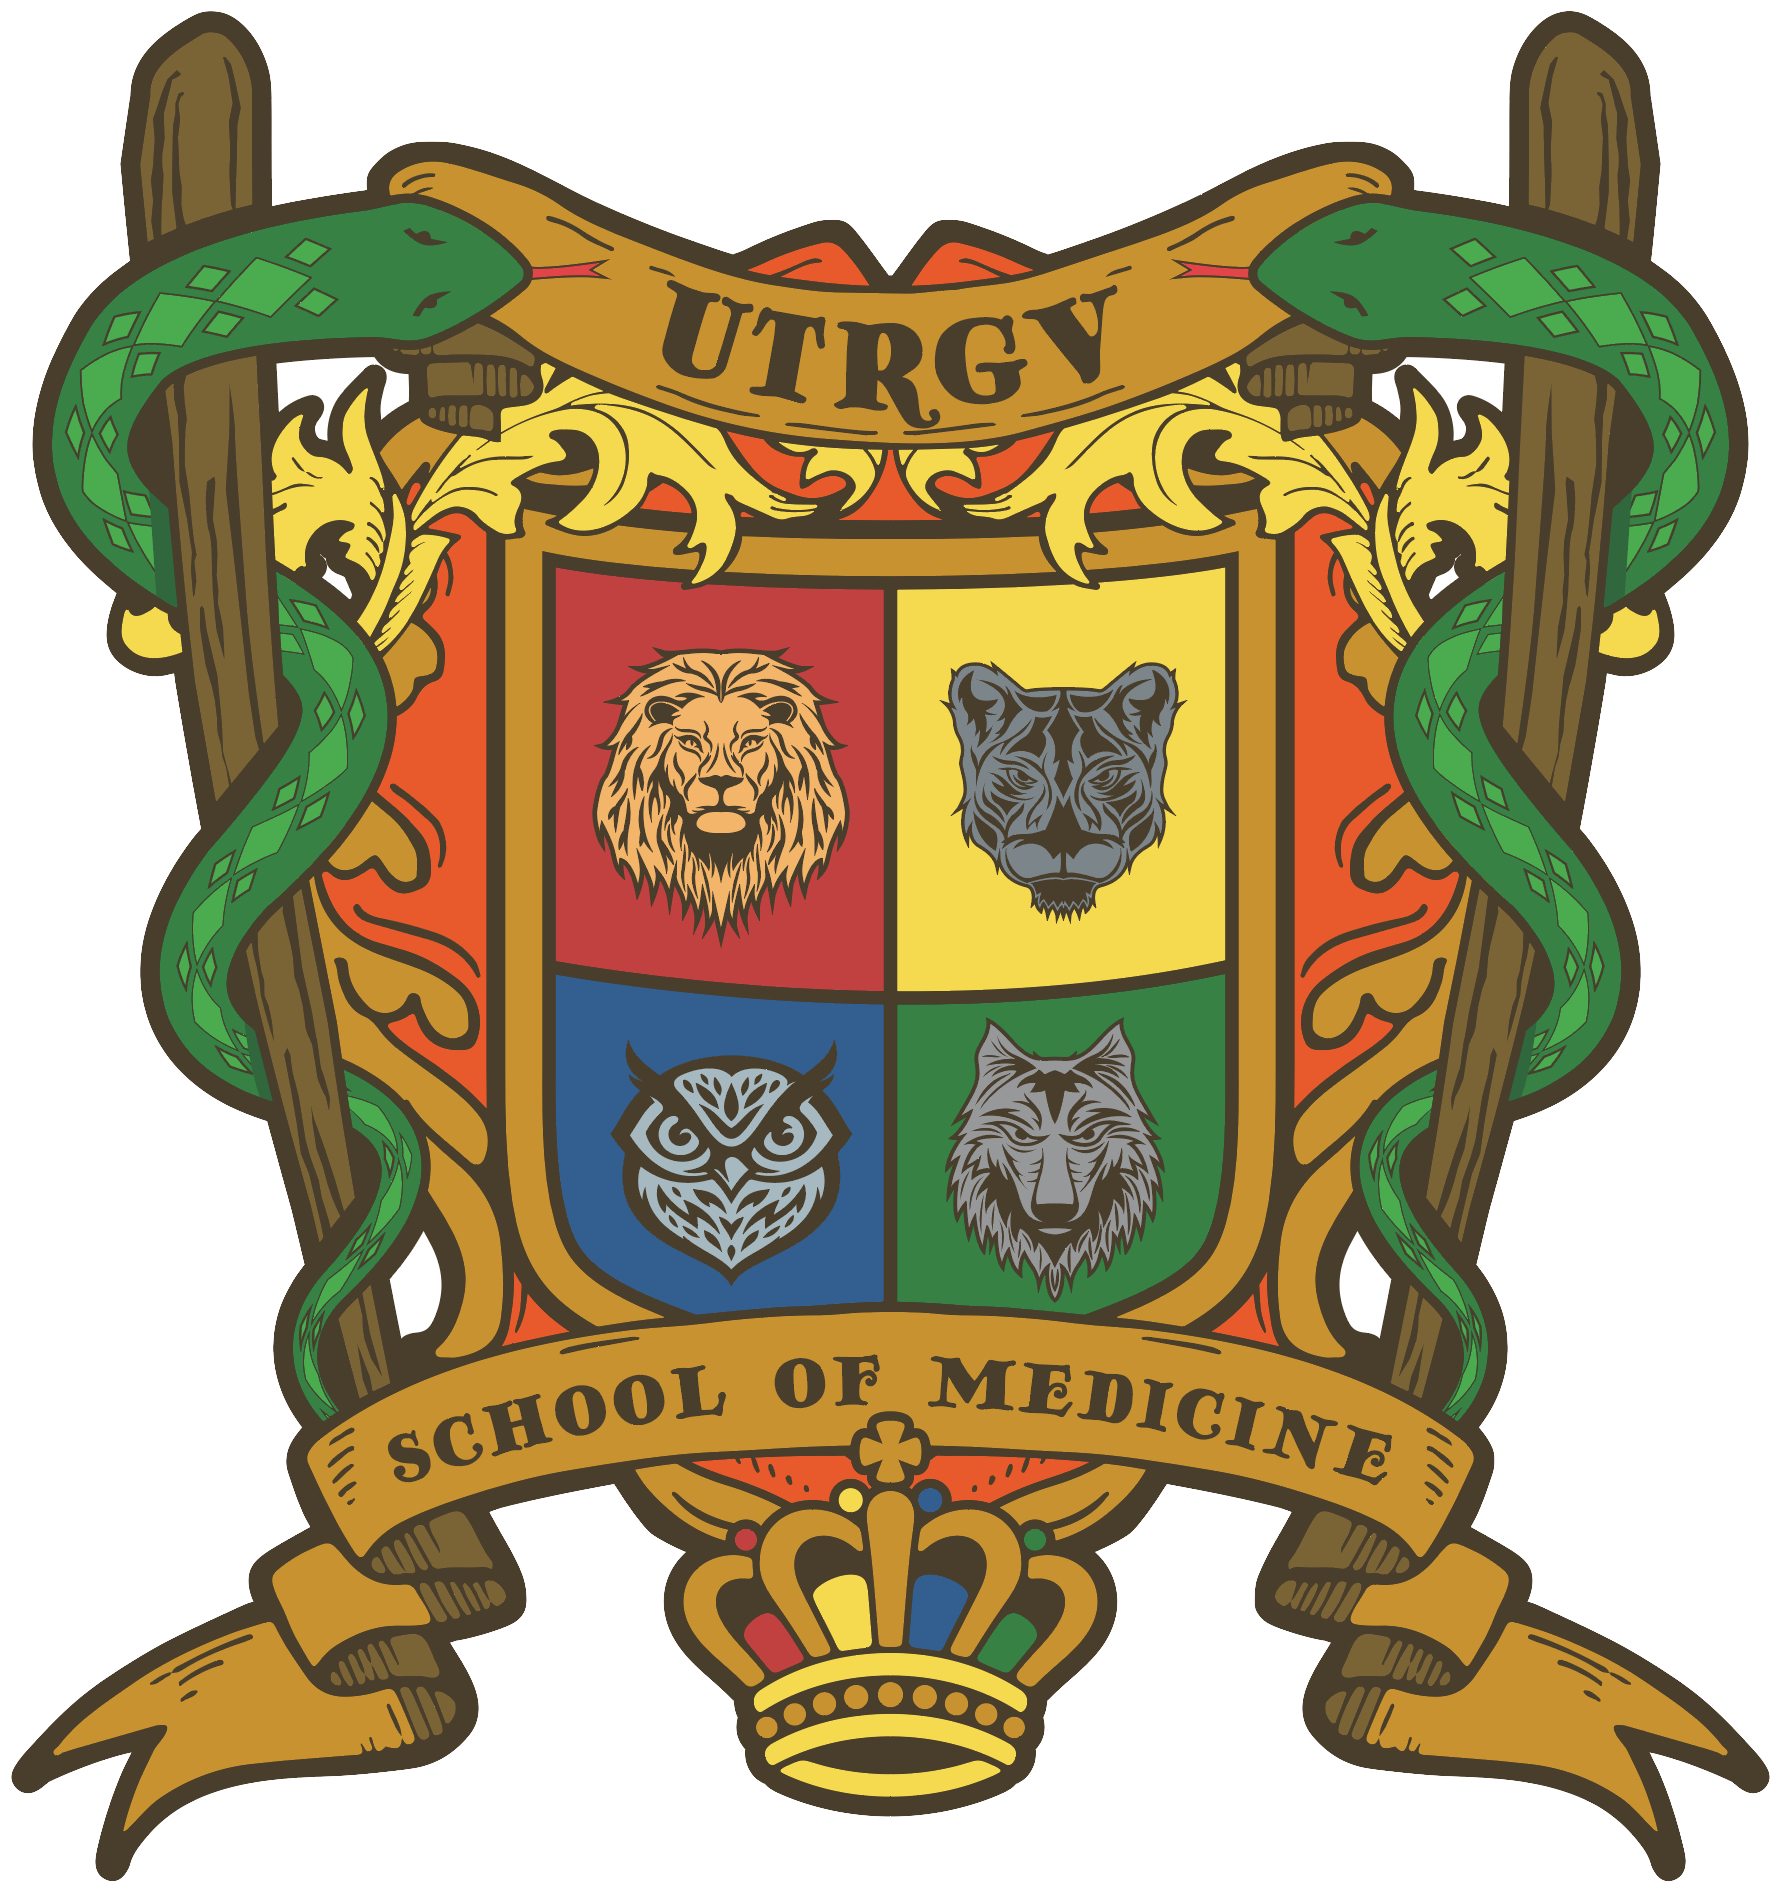 School of Medicine insignia